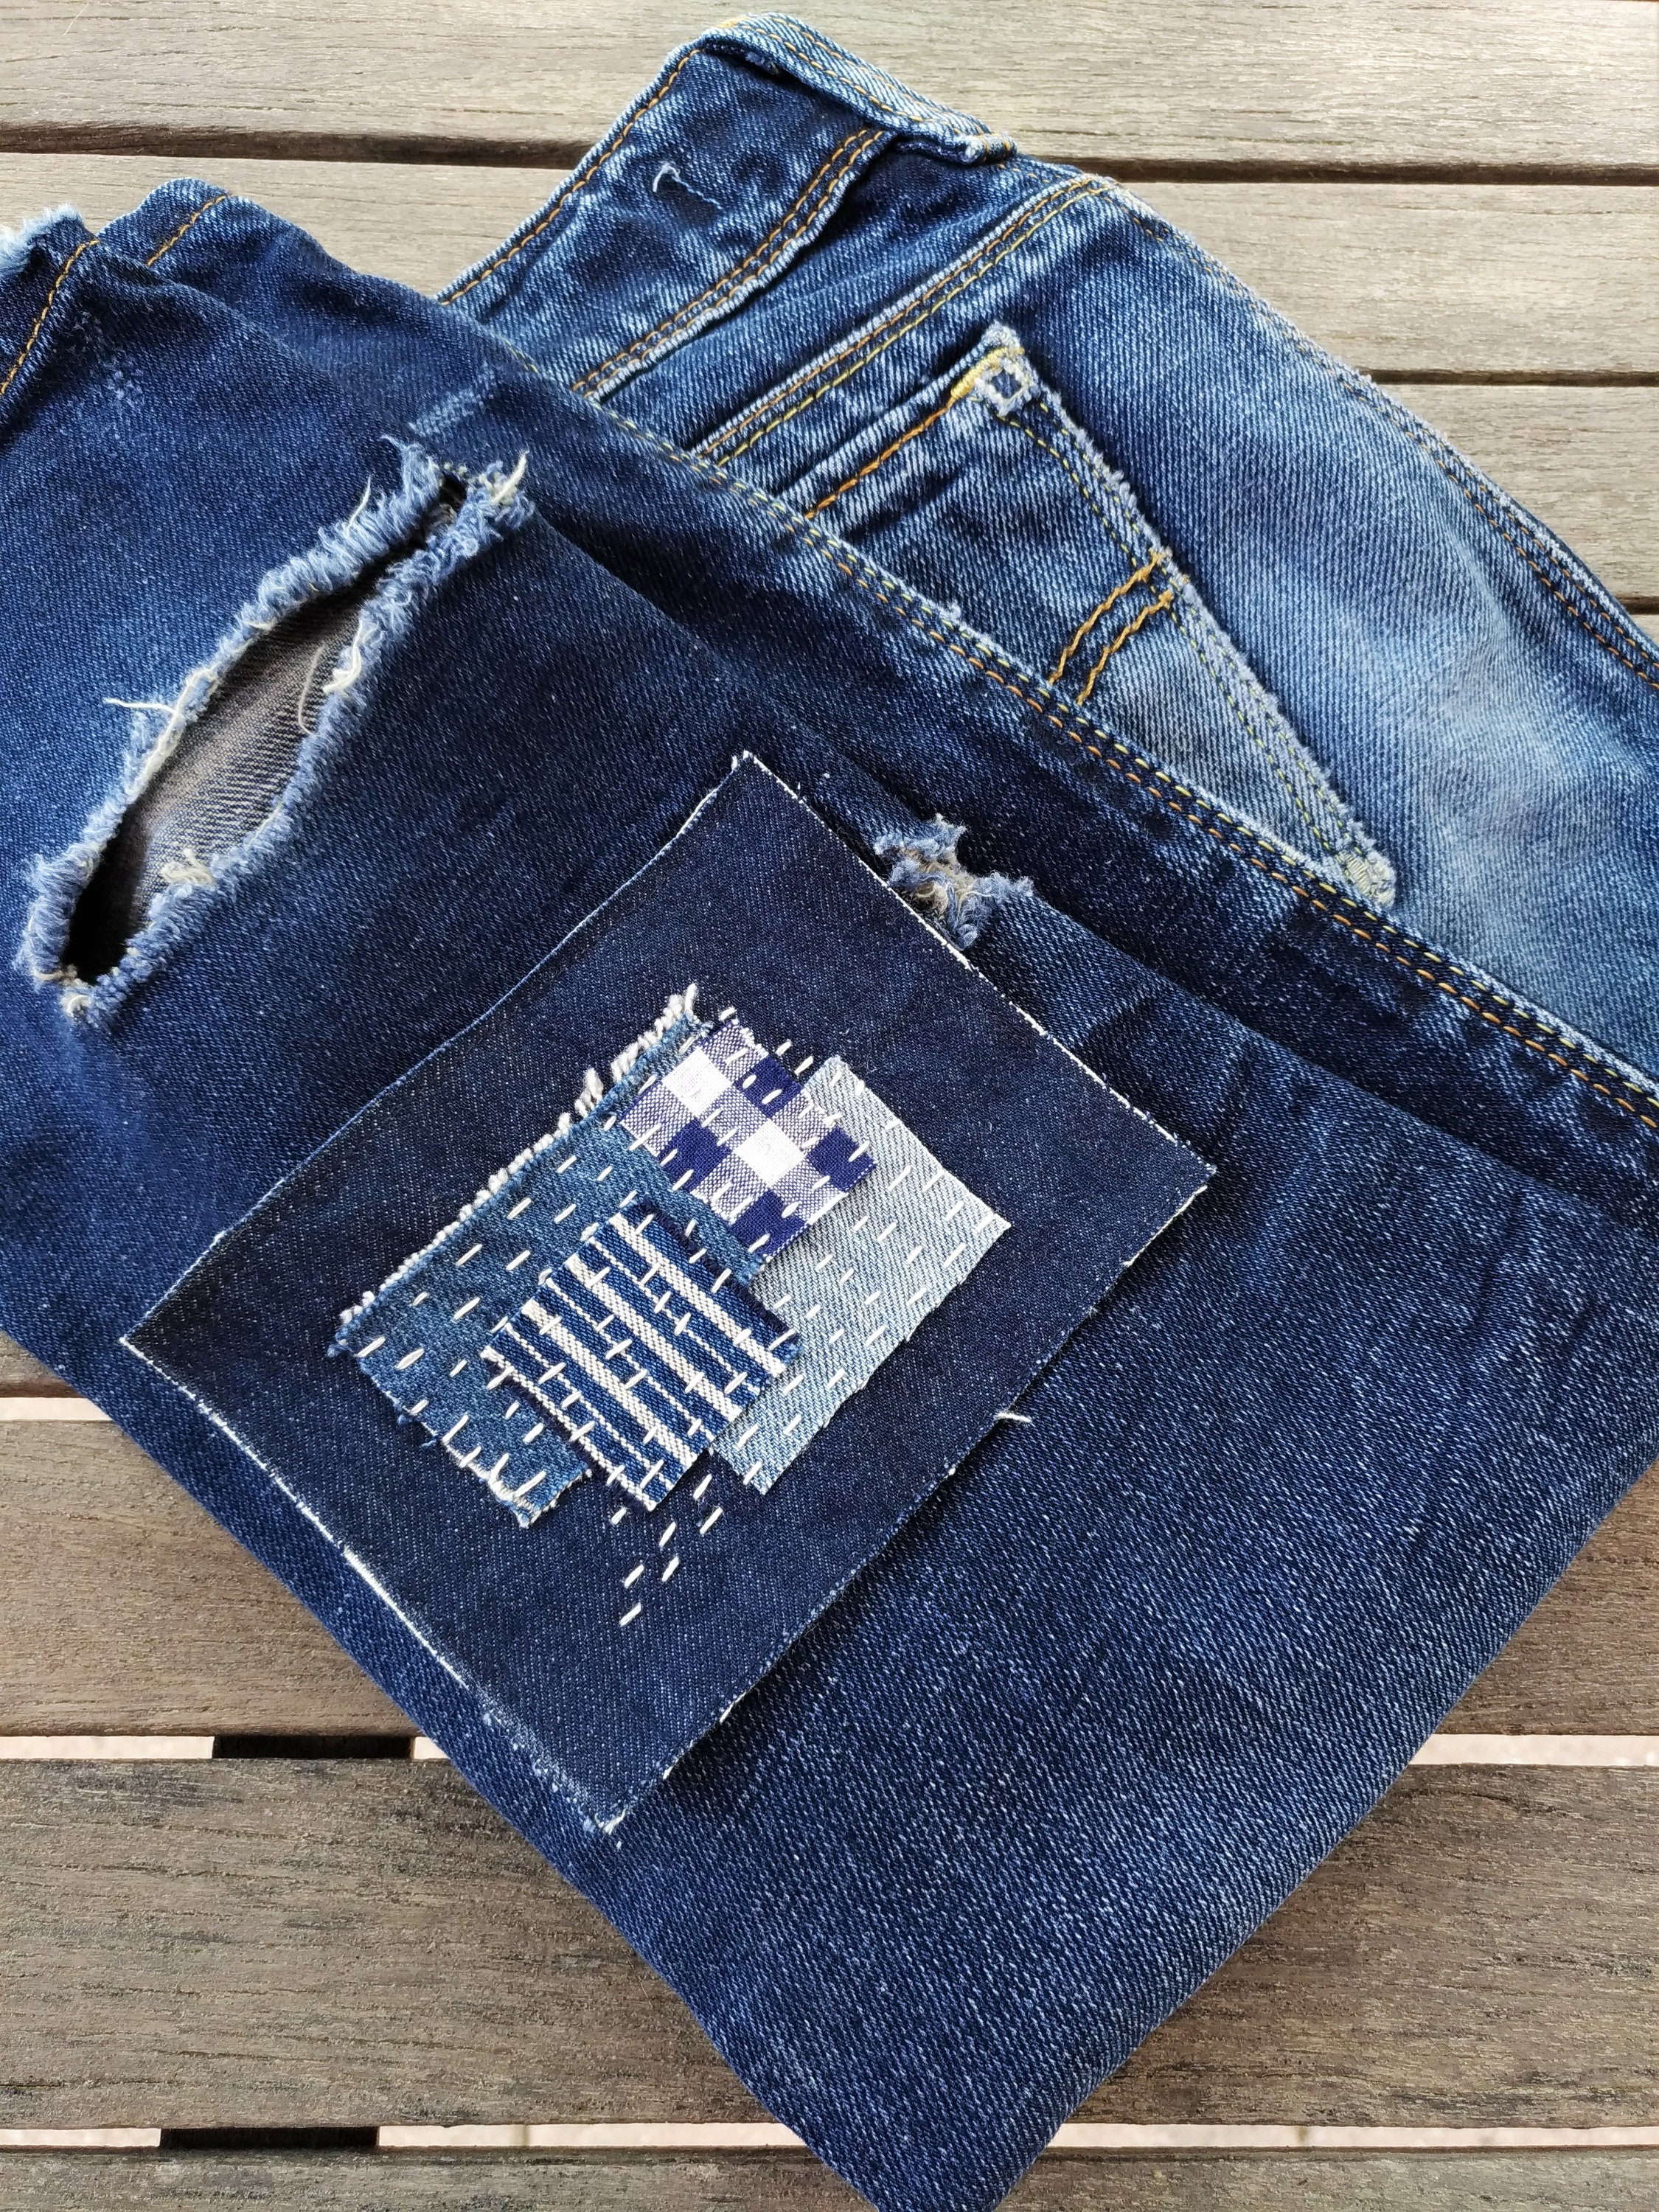 Boro Denim Applique from Recycled Jeans Sashiko Hand Stitch | Etsy